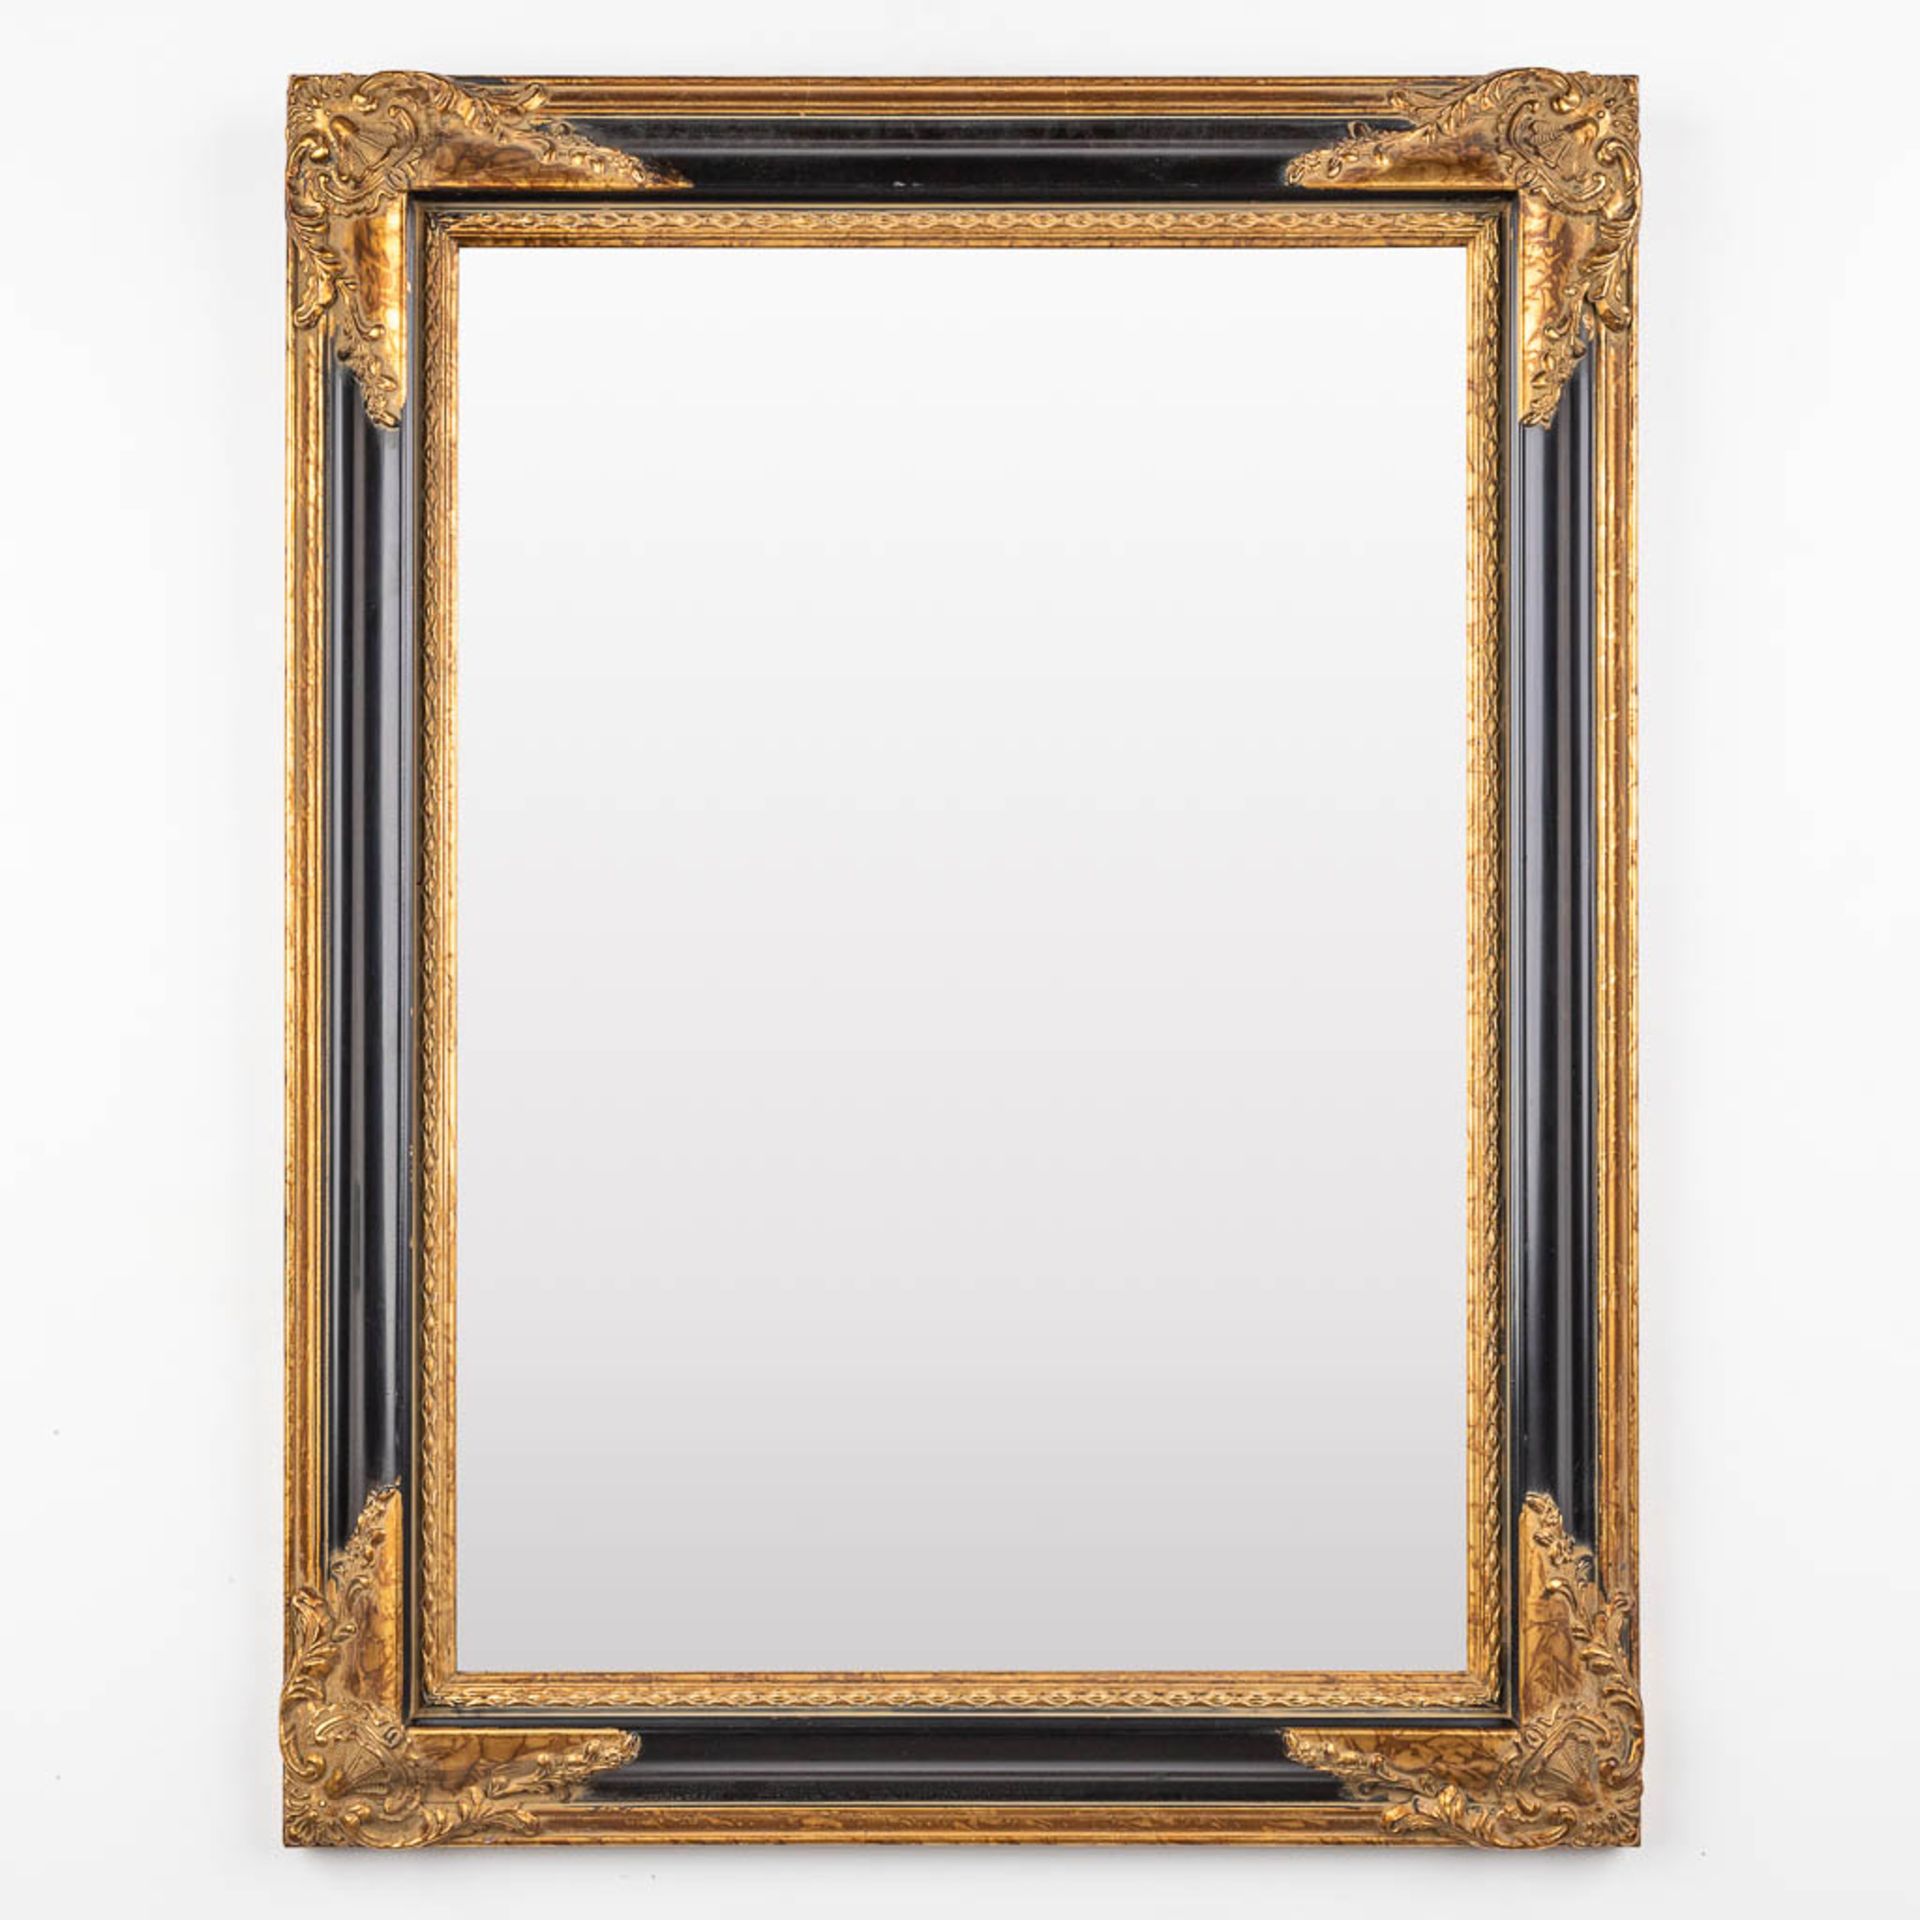 A mirror, 20th C. (W:65 x H:85 cm)